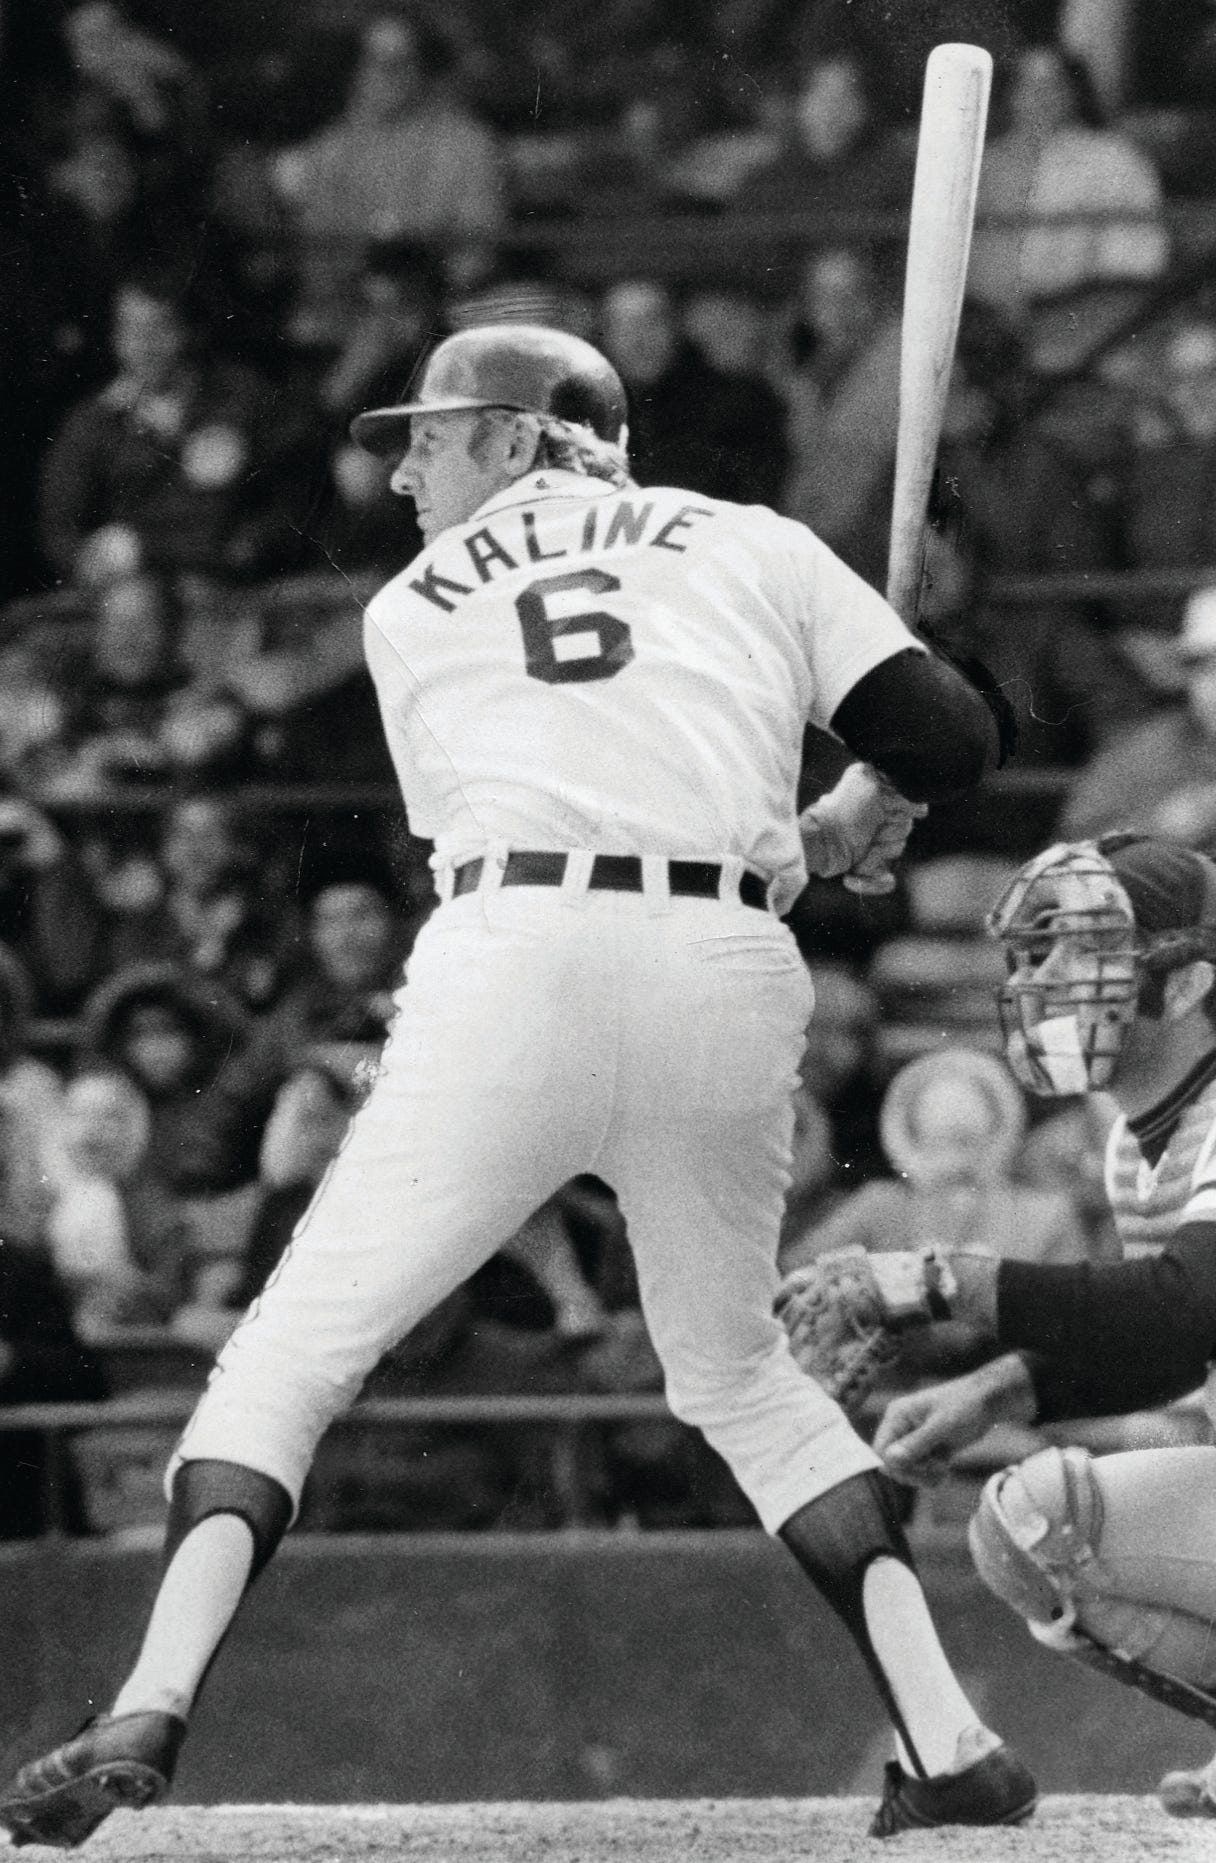 Al Kaline's final at bat on October 2, 1974 against the Baltimore Orioles at Tiger Stadium in Detroit.